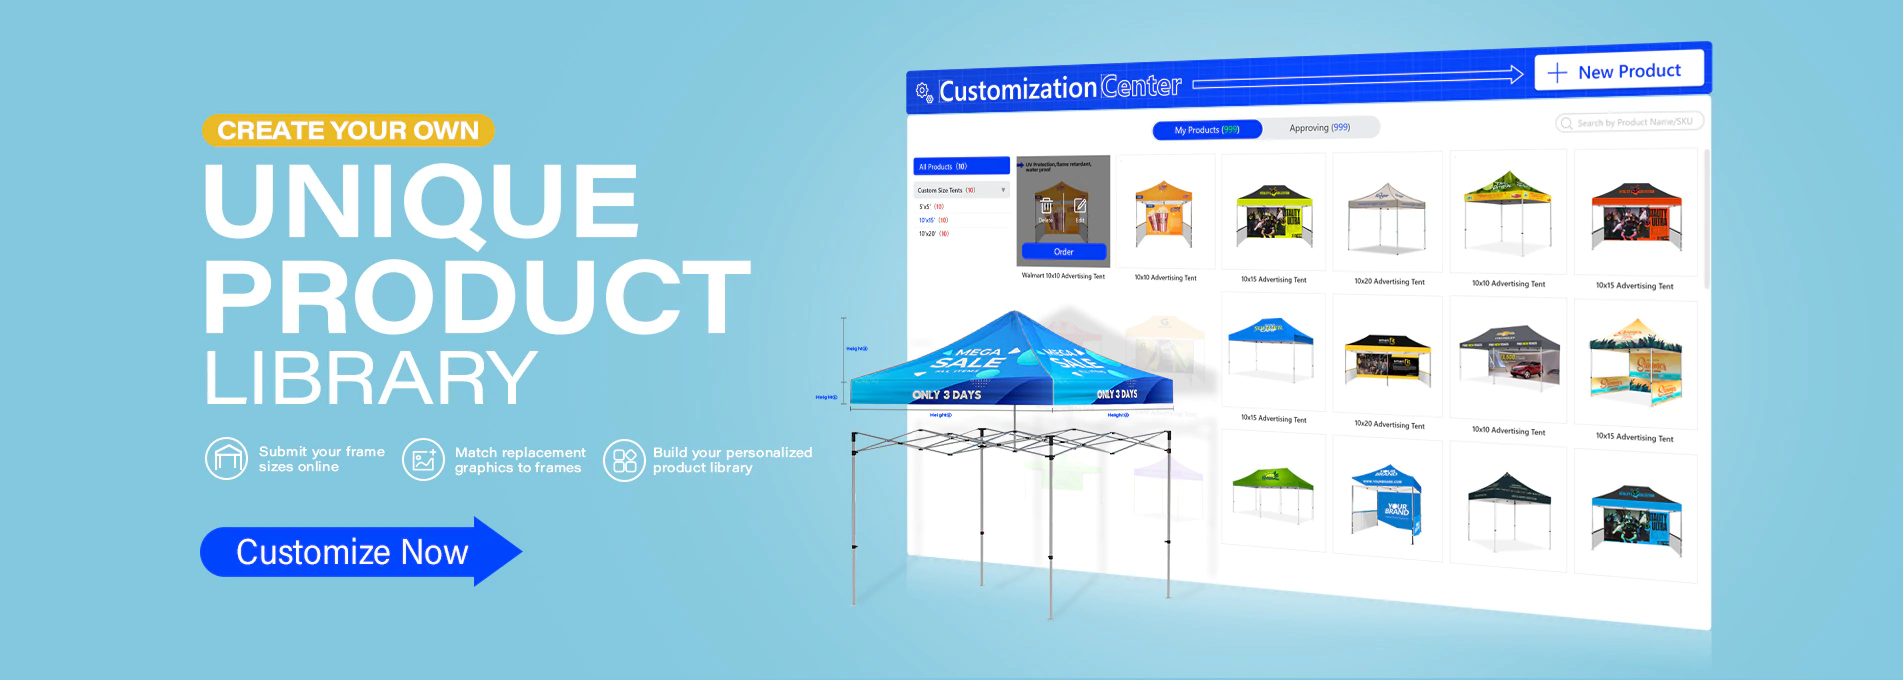 Product Customization Center